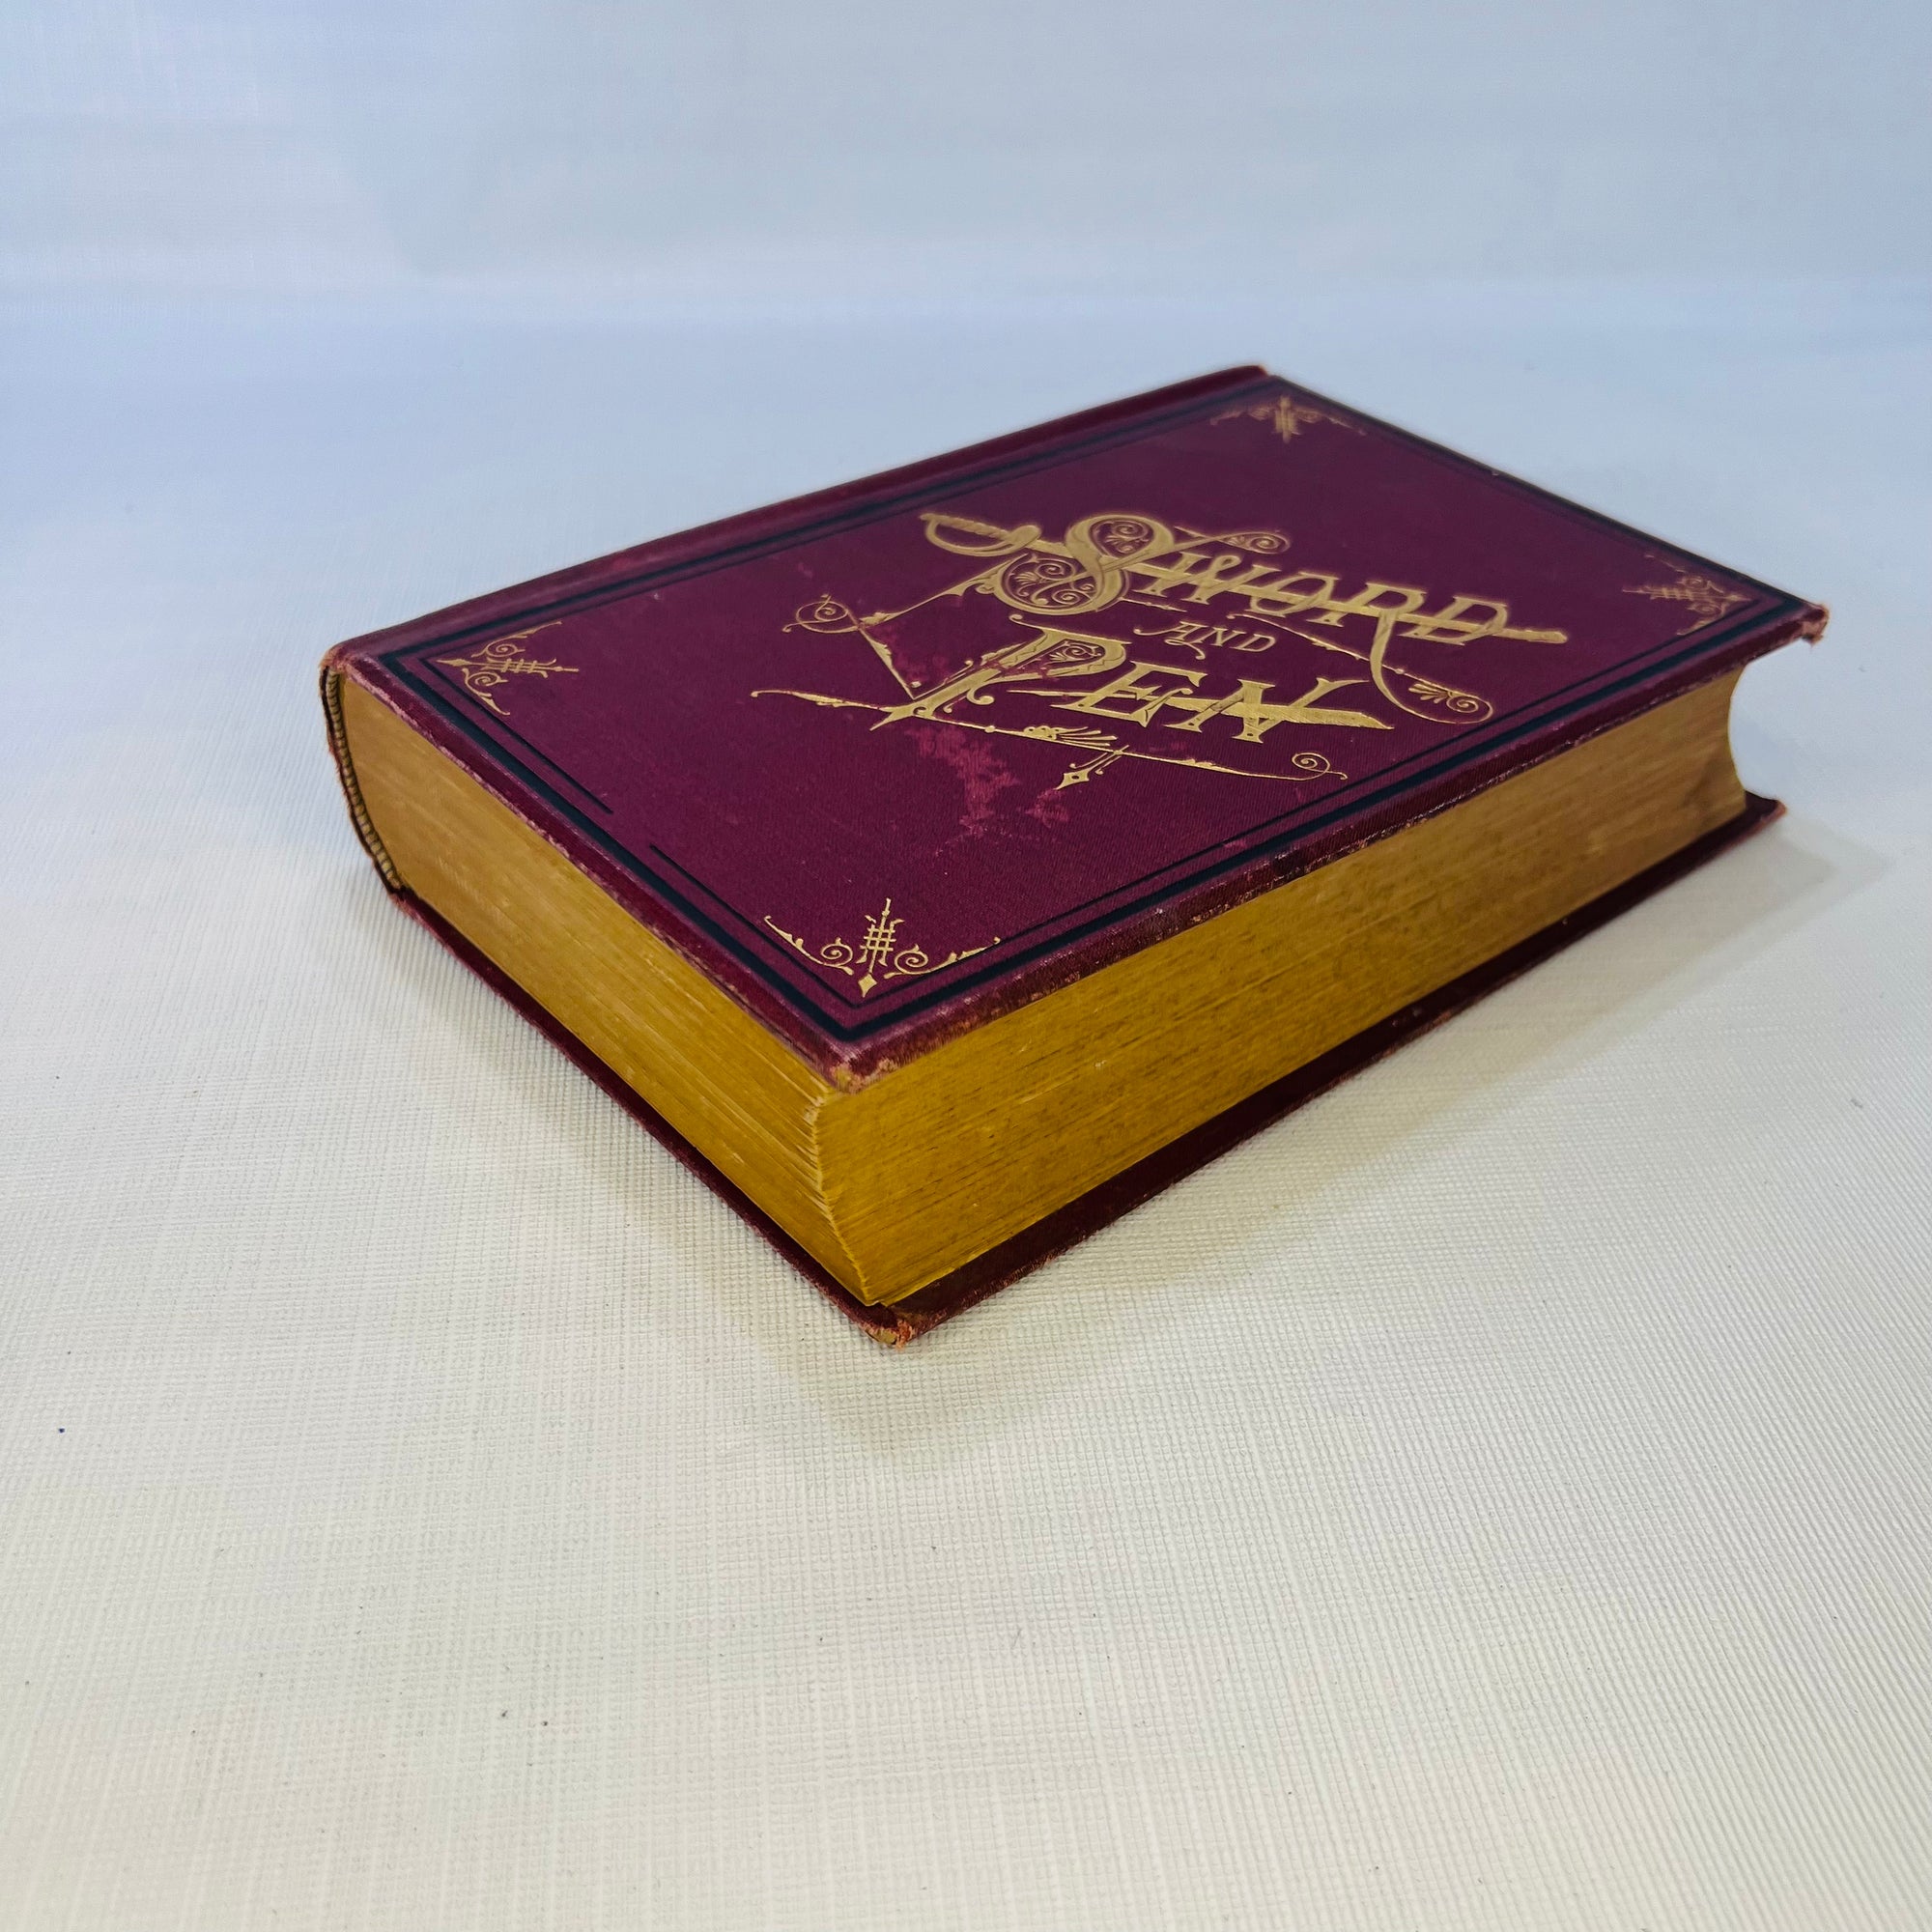 Sword and Pen or Ventures and Adventures of Willard Glazier by John Algernon Owens 1884 P.W.Ziegler & Company